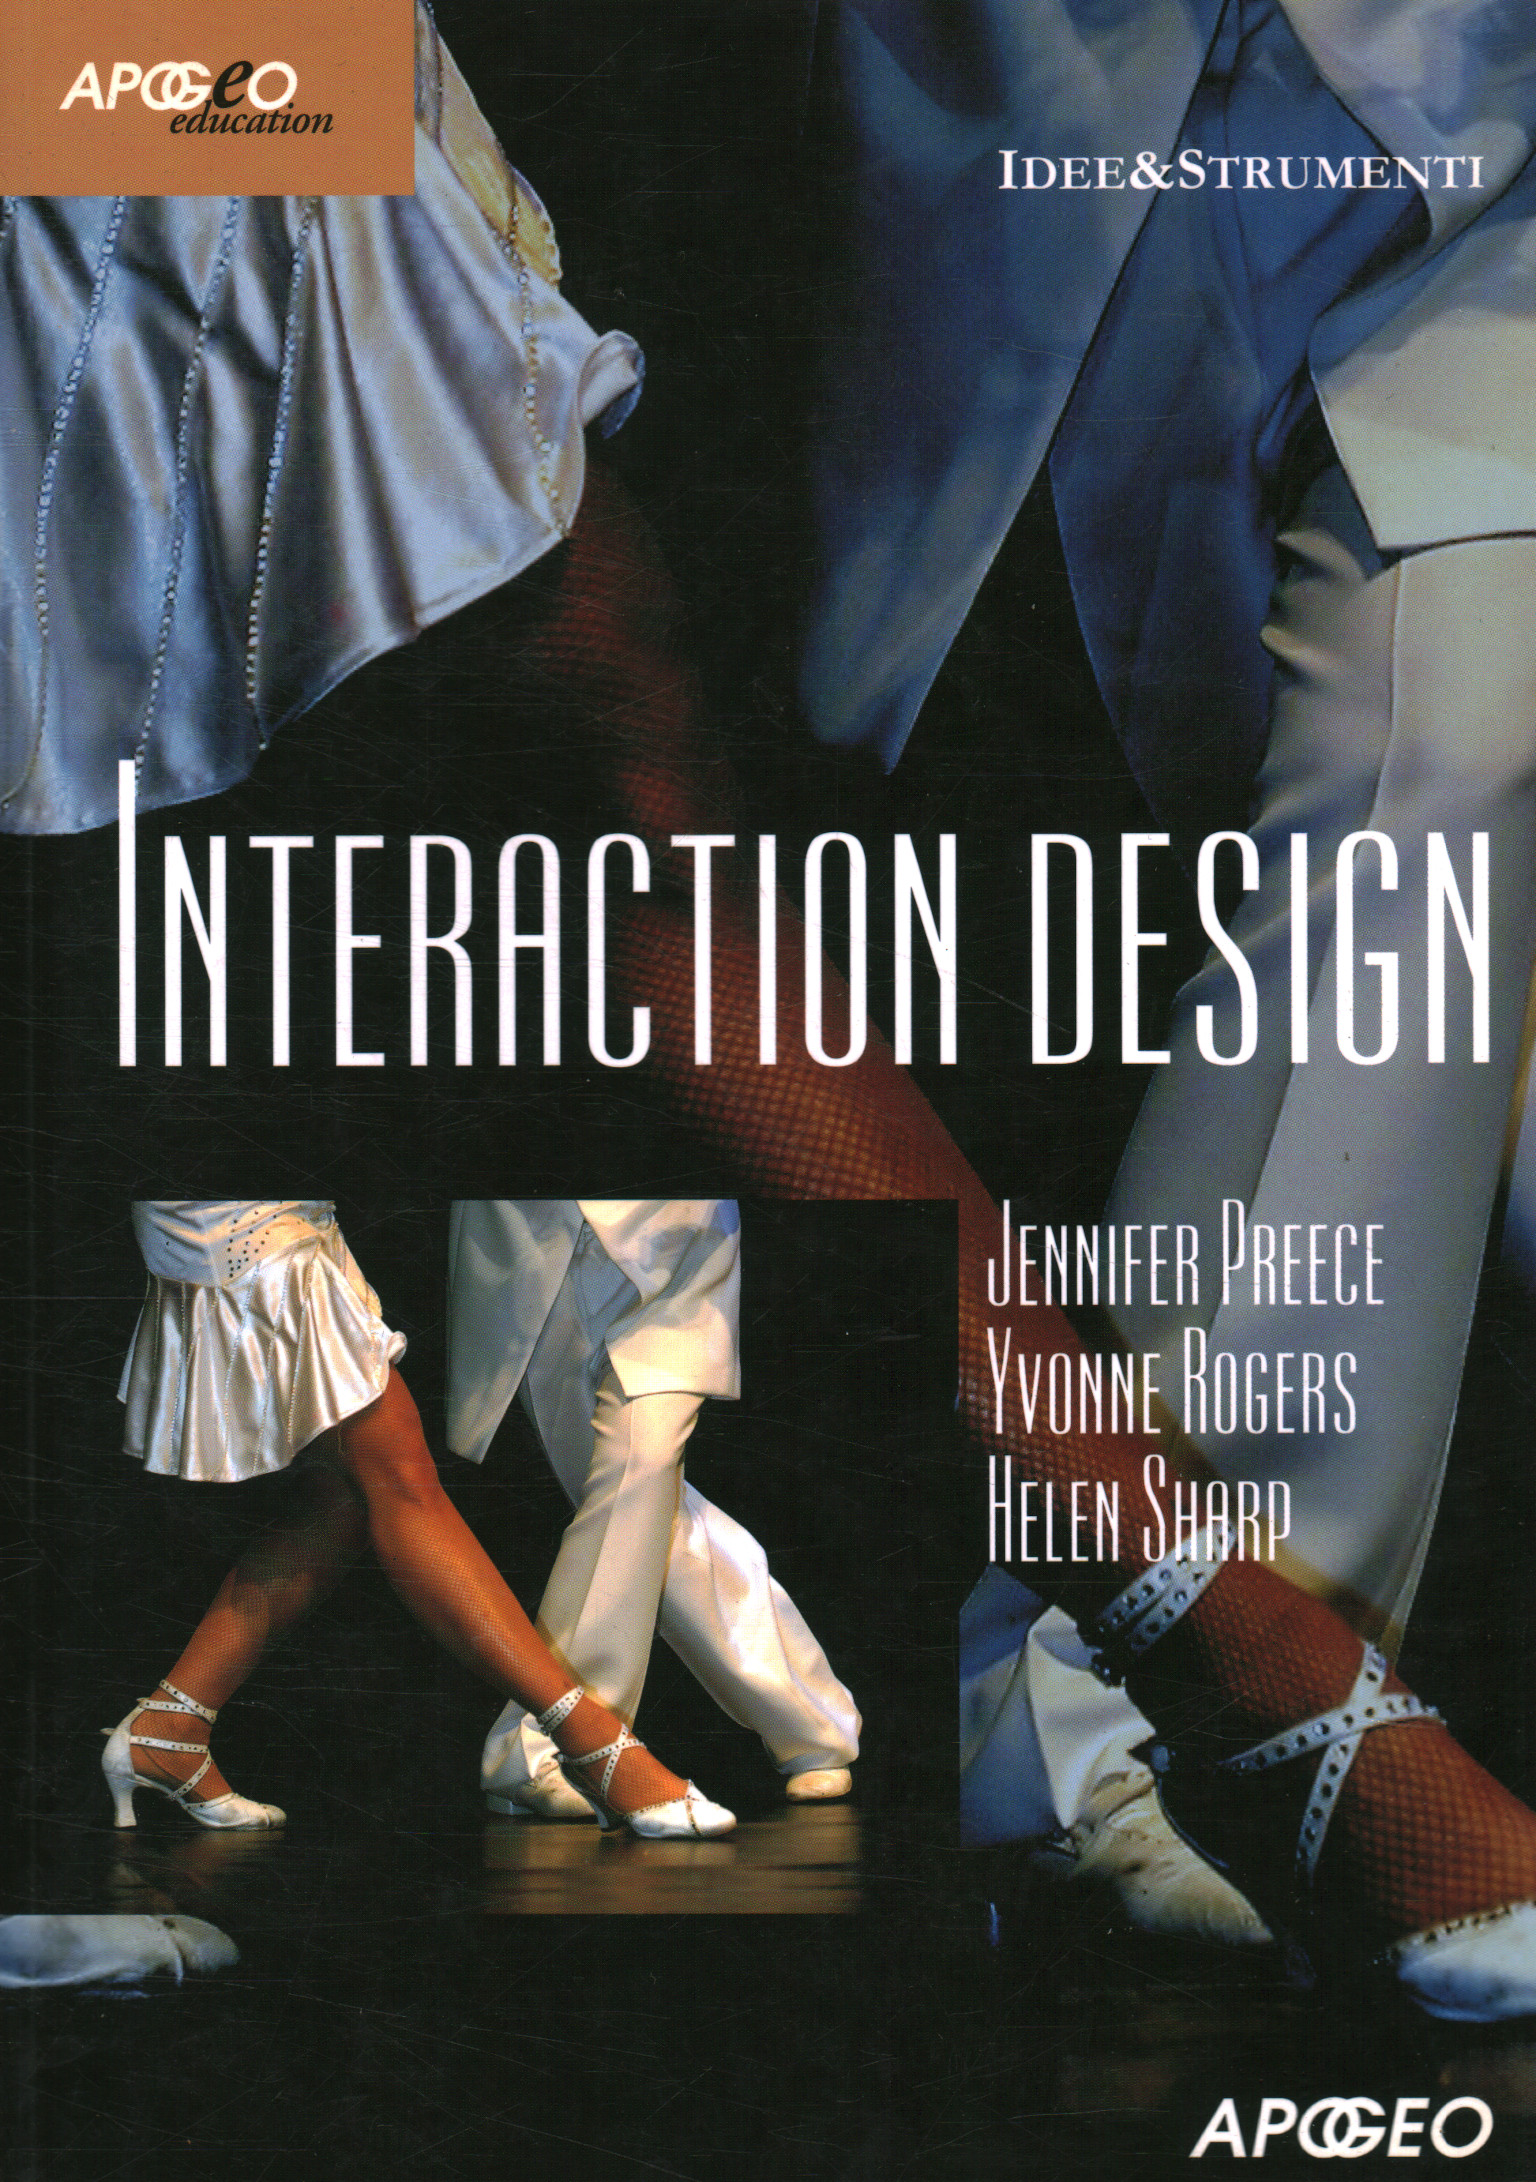 Diseño de interacción